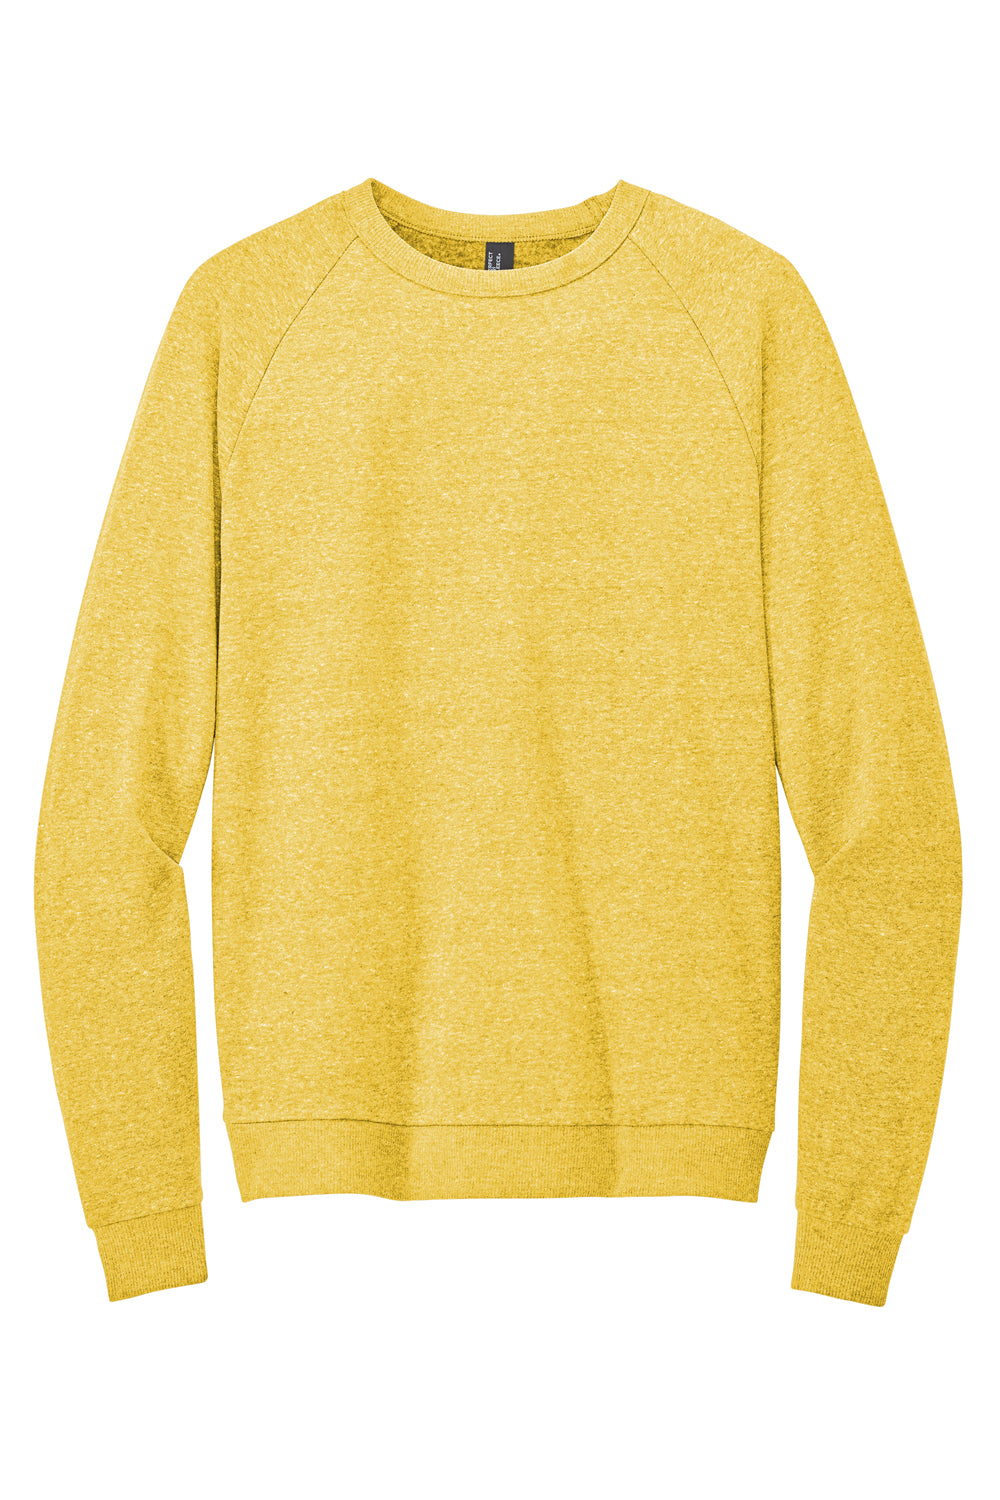 District DT1304 Mens Perfect Tri Fleece Crewneck Sweatshirt Heather Ochre Yellow Flat Front